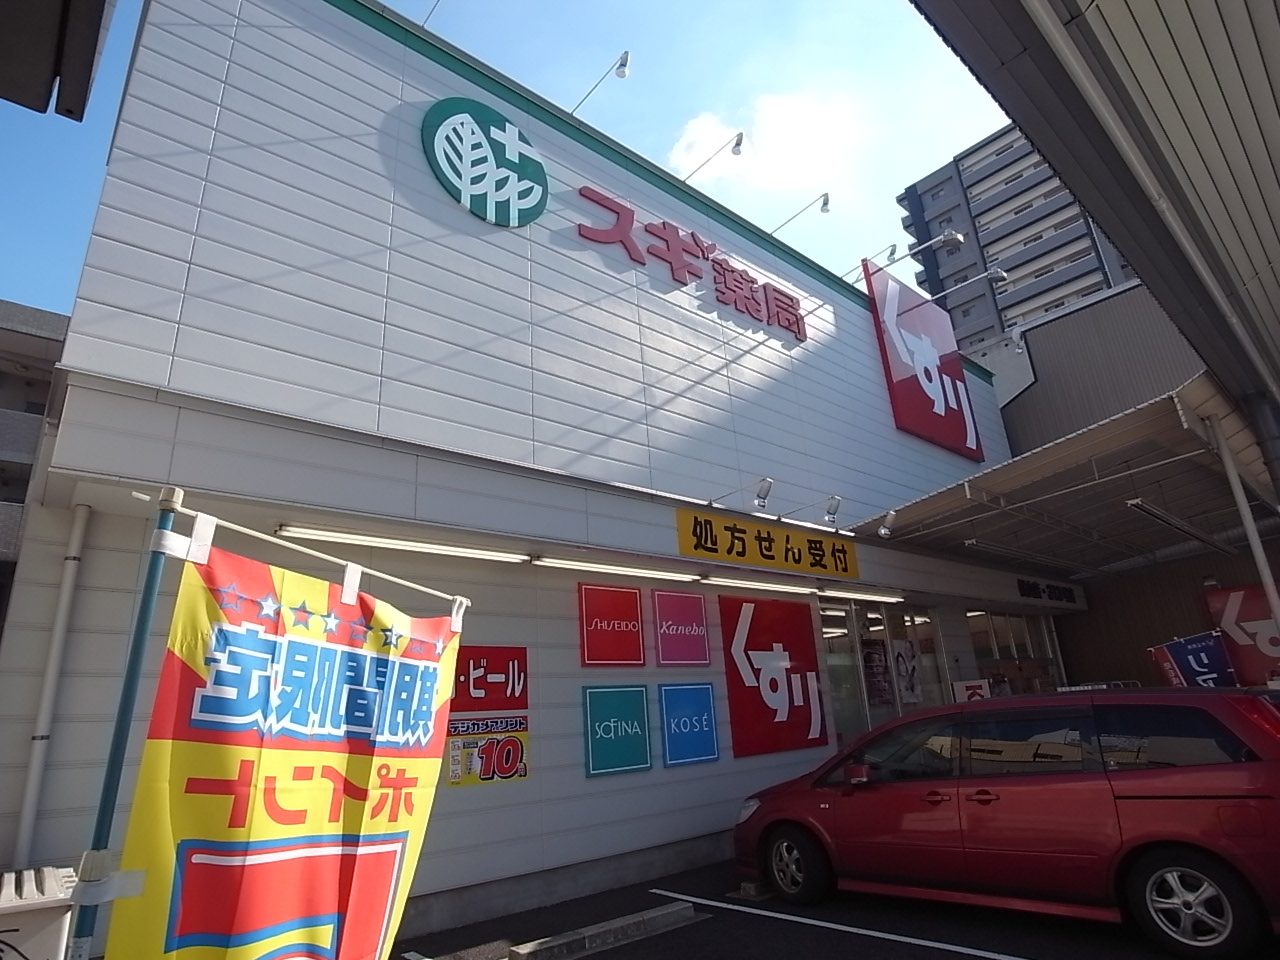 Dorakkusutoa. Cedar pharmacy Sakurayama shop 128m until (drugstore)